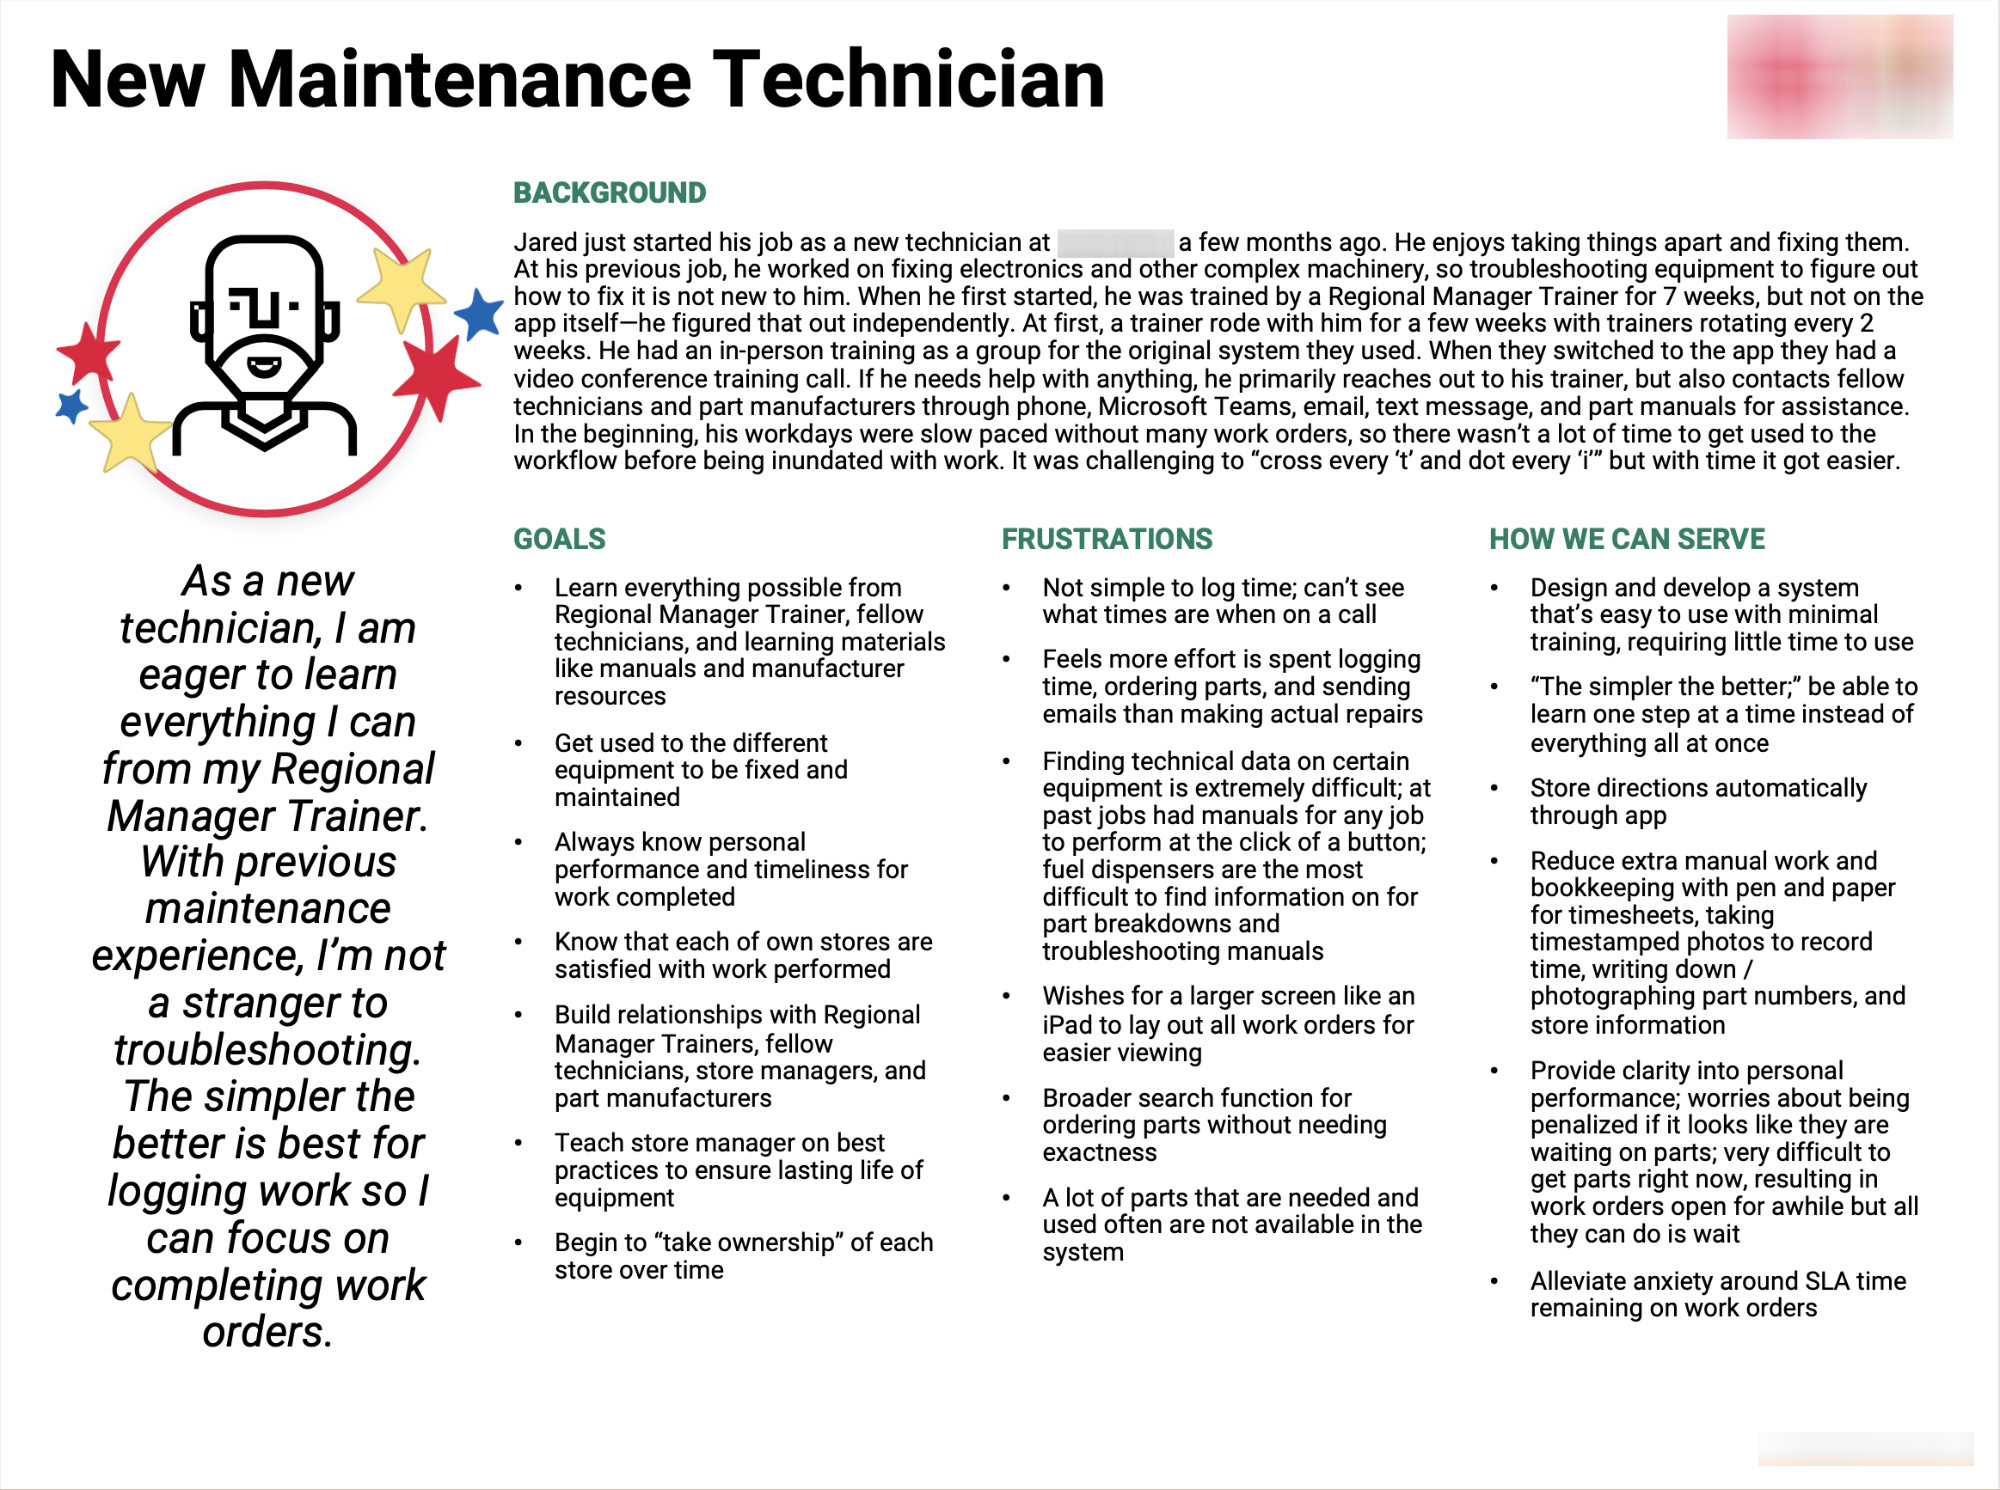 Persona for New Maintenance Technician